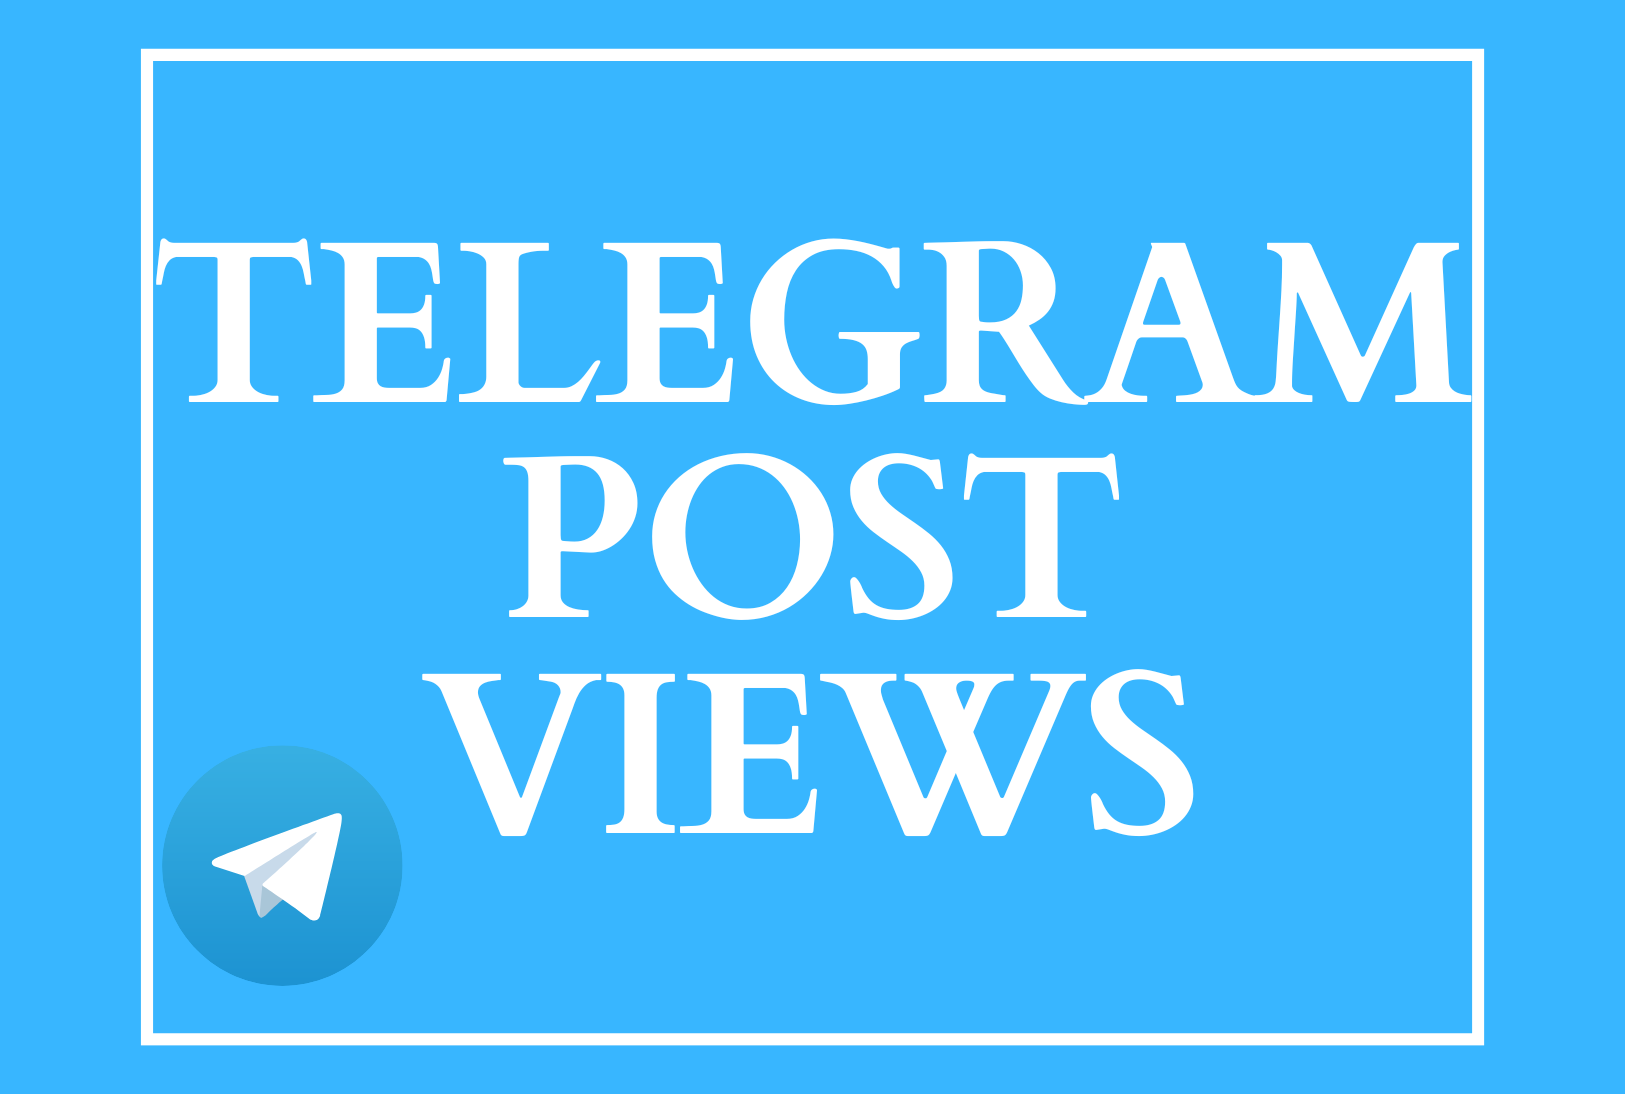 500 views of posts on Telegram